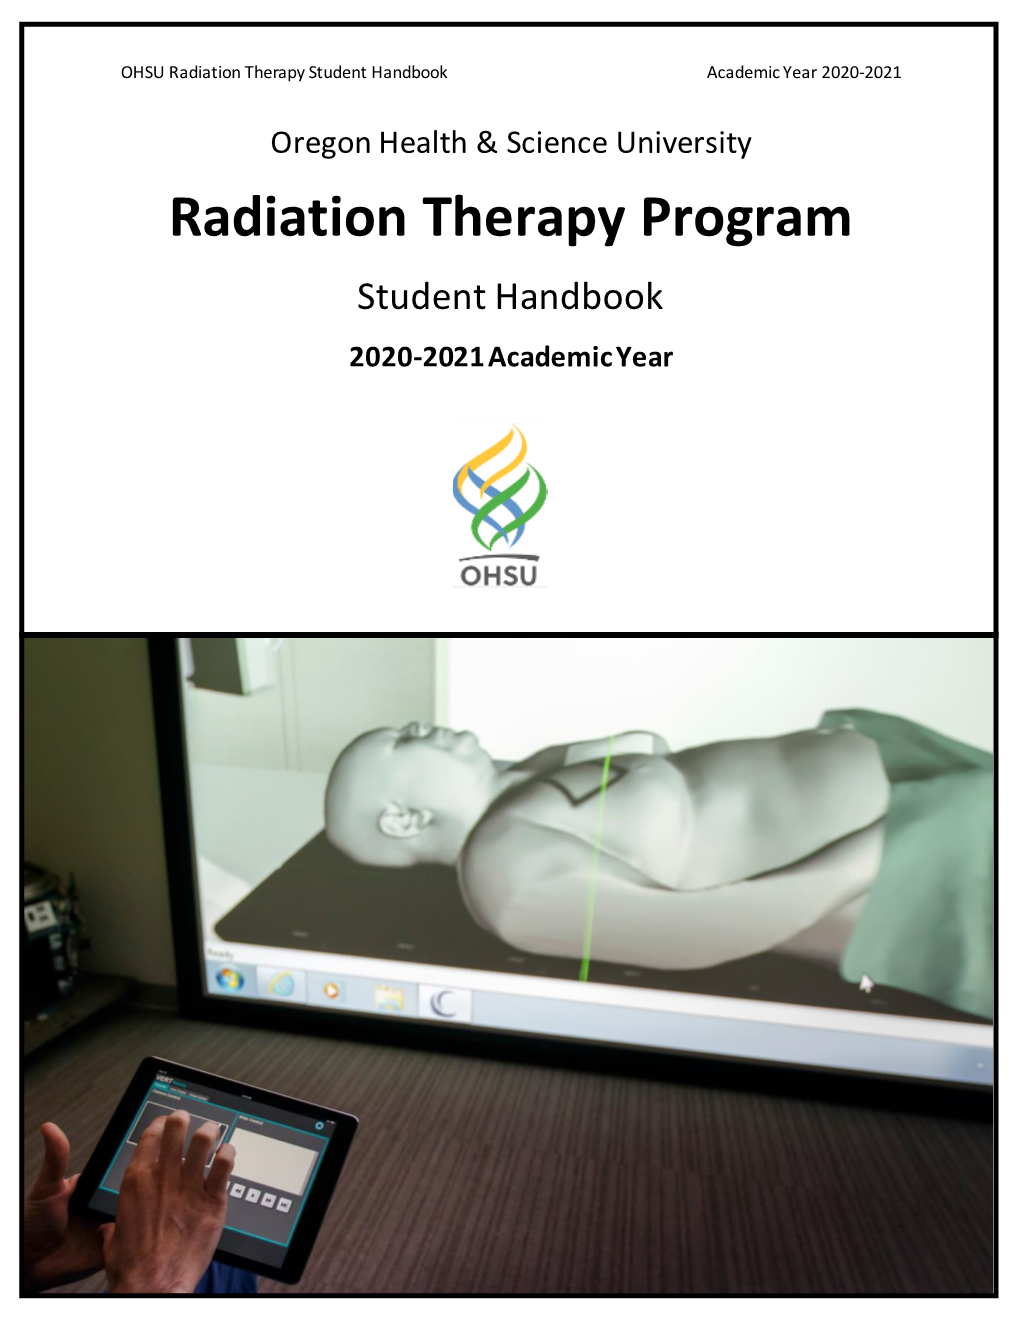 OHSU Radiation Therapy Program Student Handbook